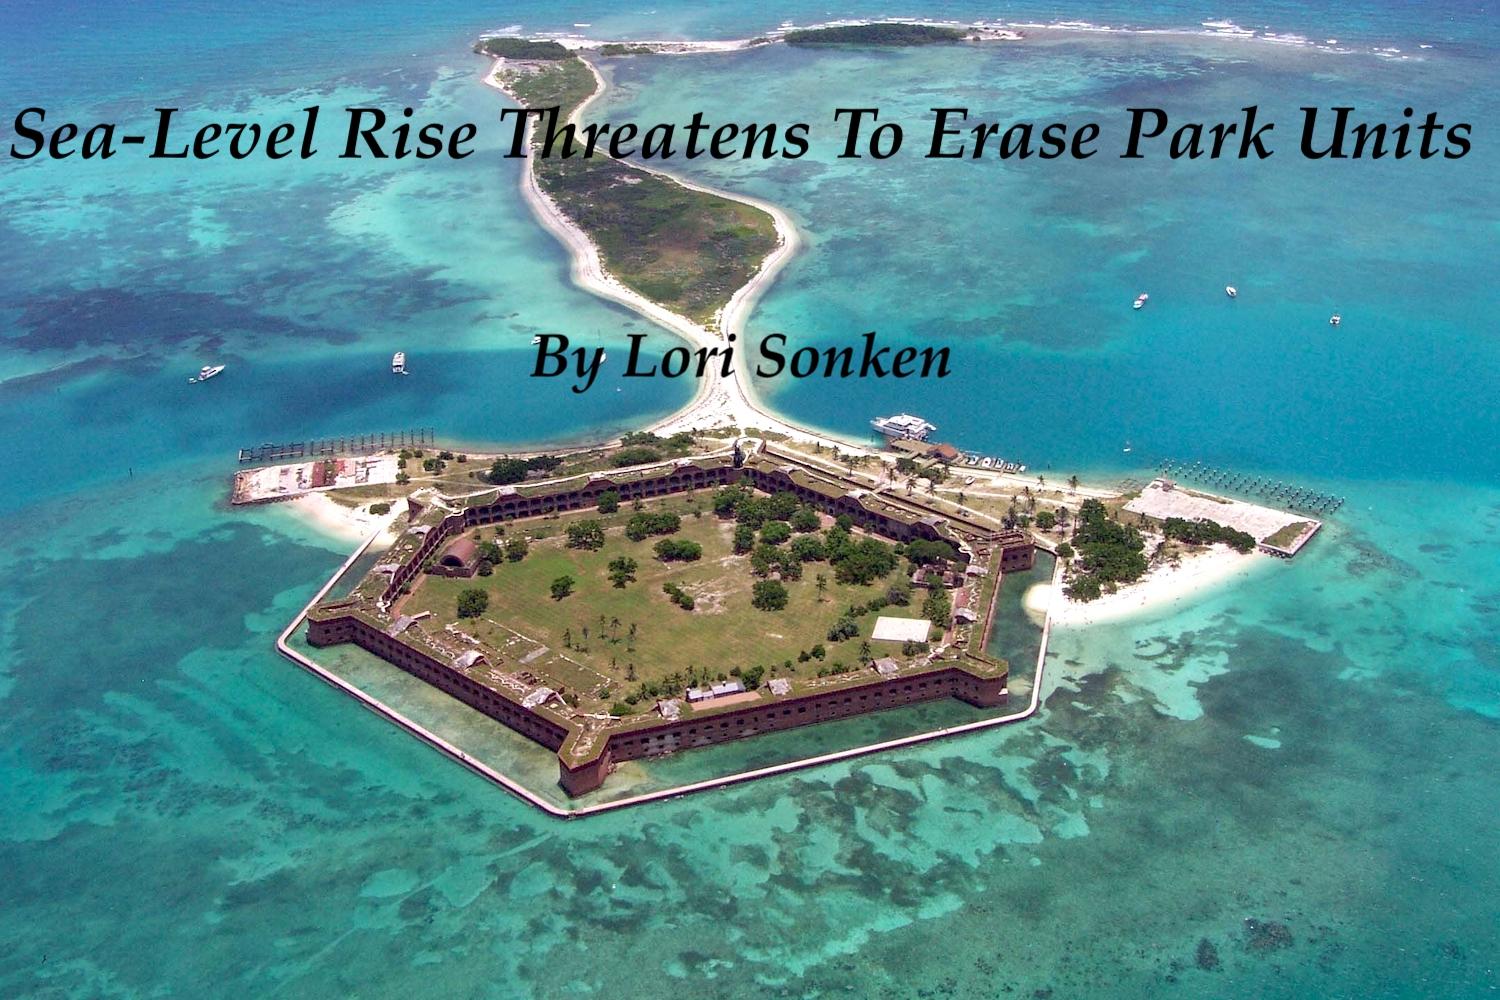 Sea-Level Rise Threatens To Erase Park Units